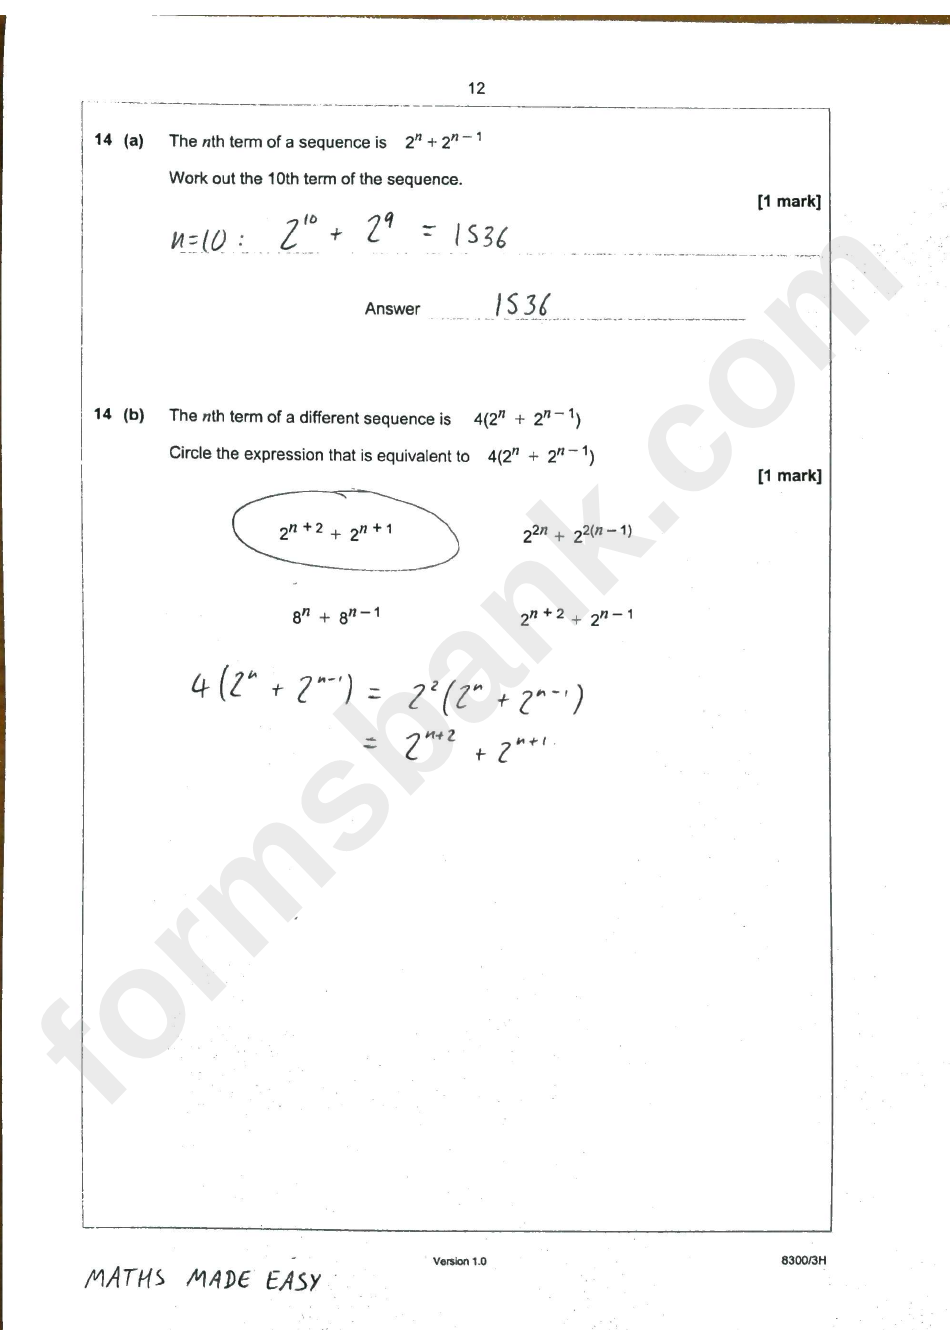 Aqa Gcse Mathematics Specification (8300/3h) With Answer Key - 2015